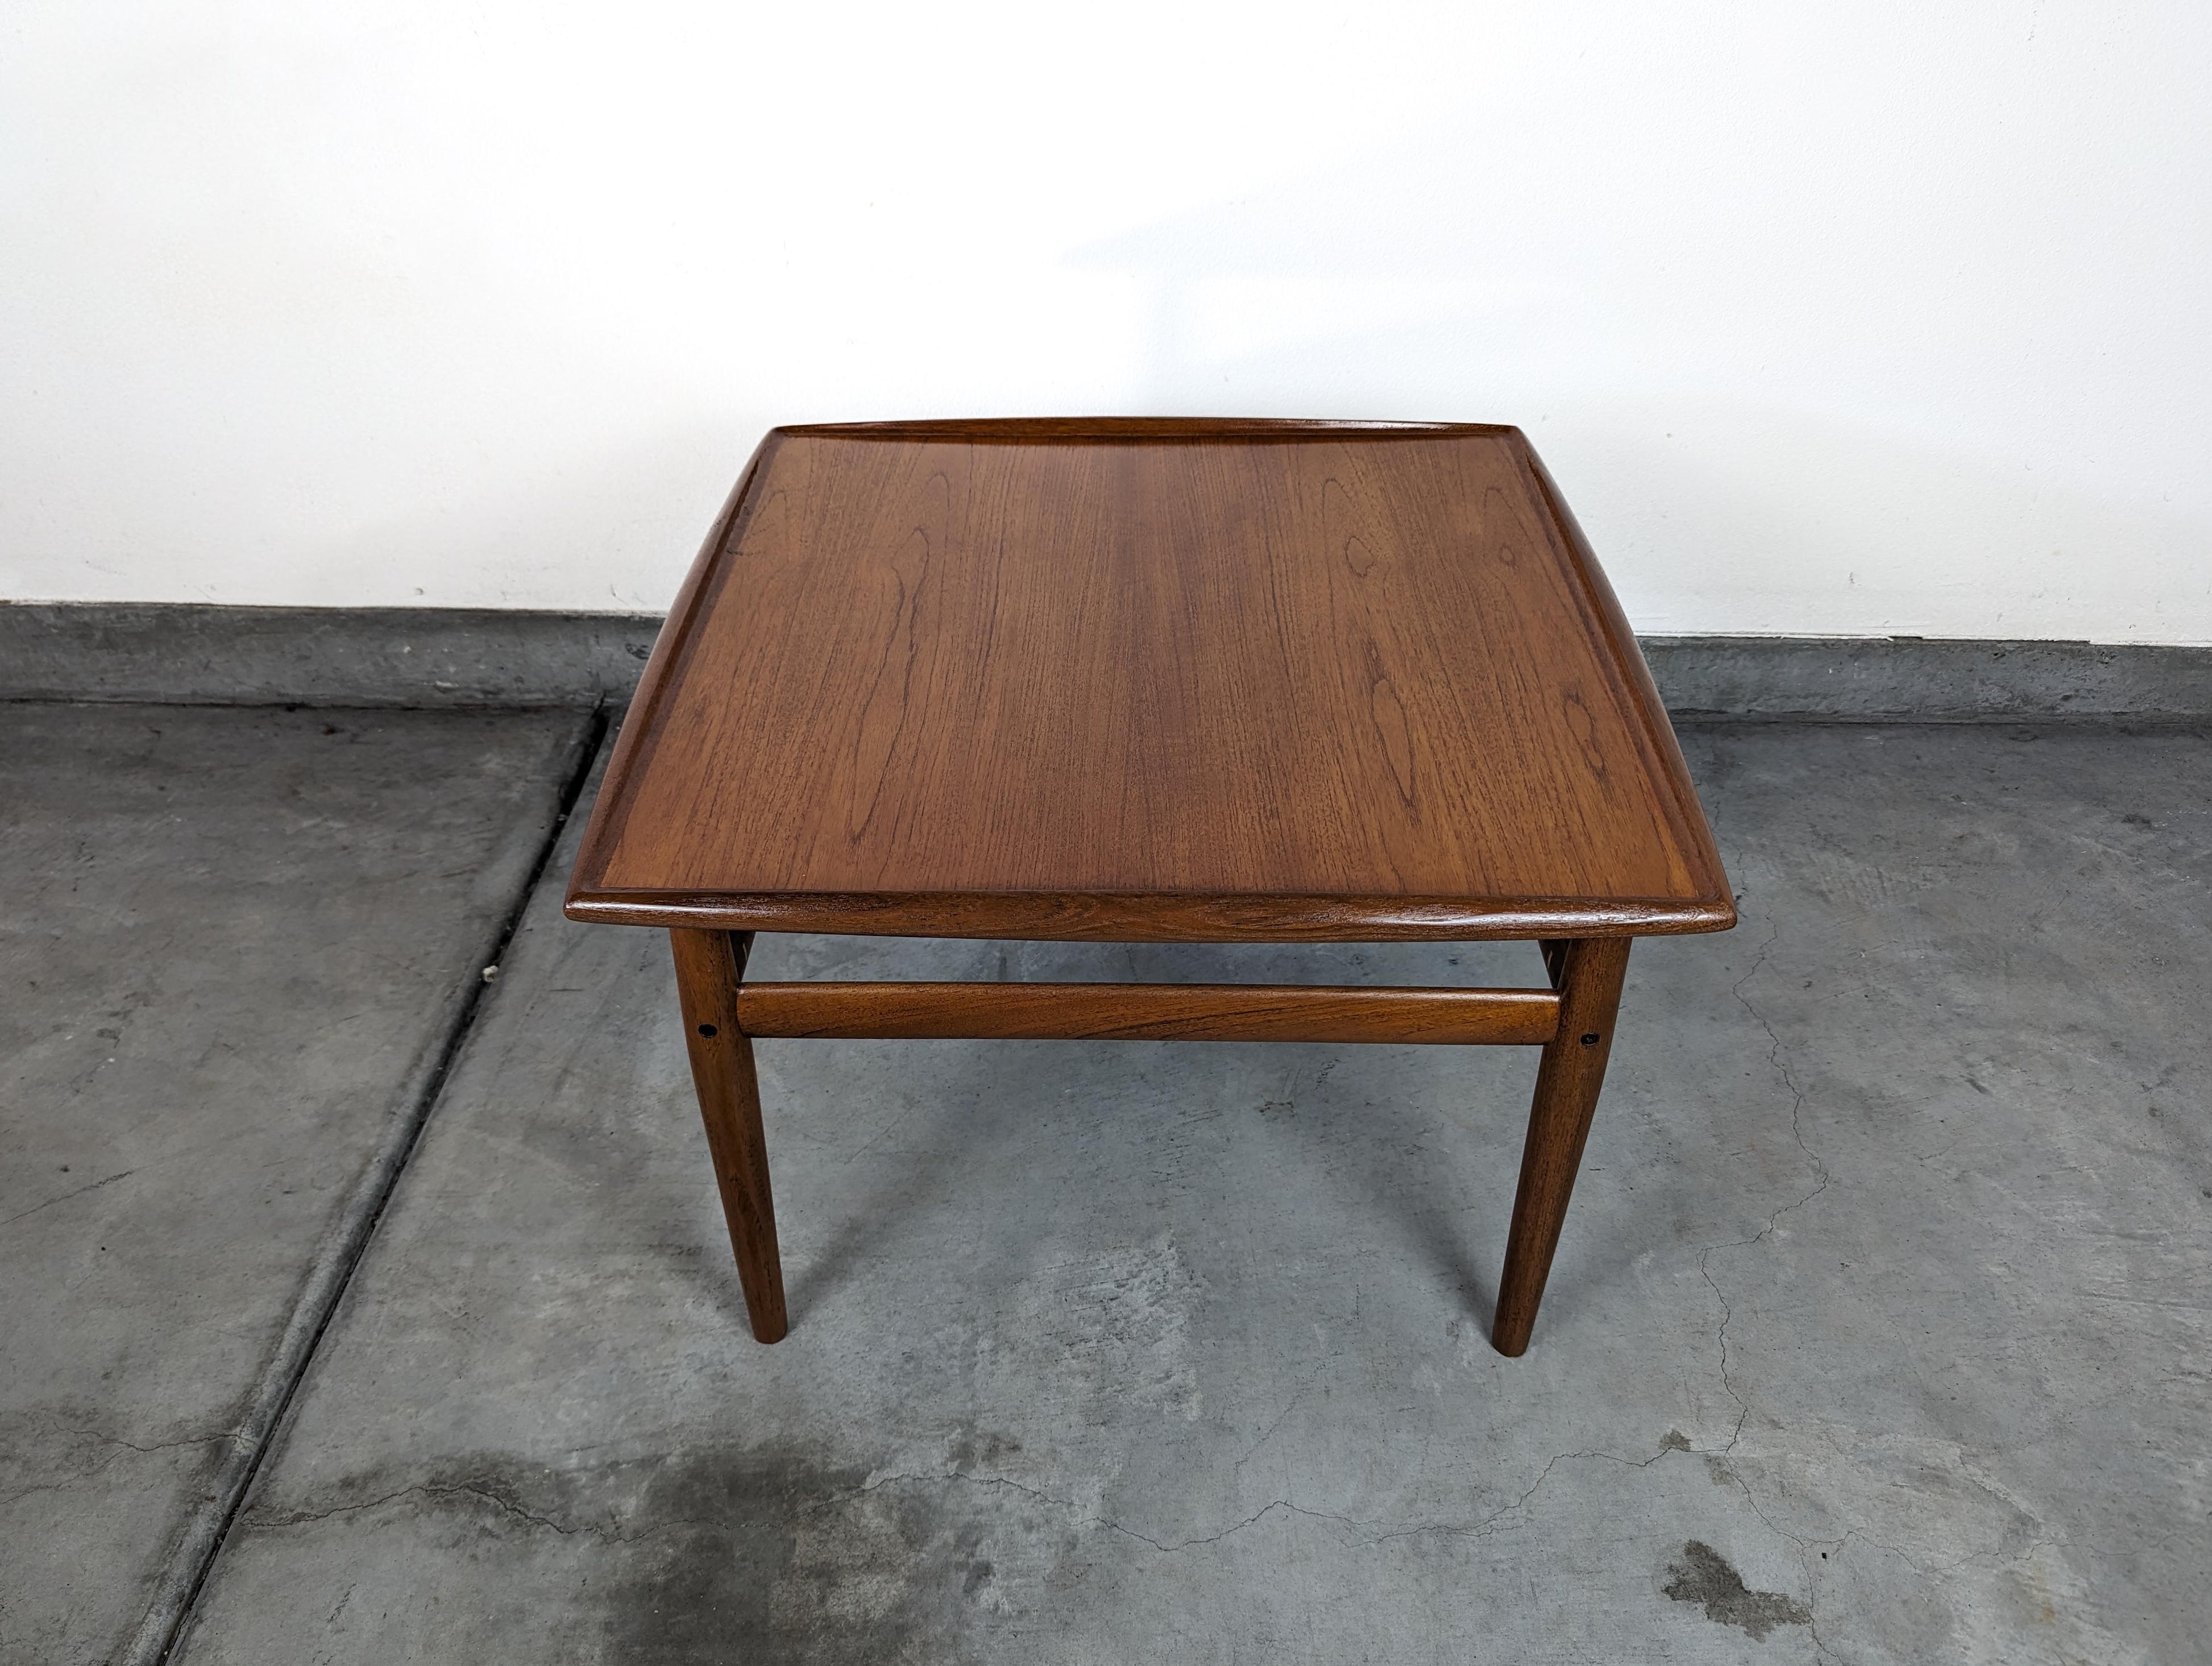 Mid Century Modern Teak Side Table Designed by Grete Jalk for Glostrup, c1960s For Sale 2